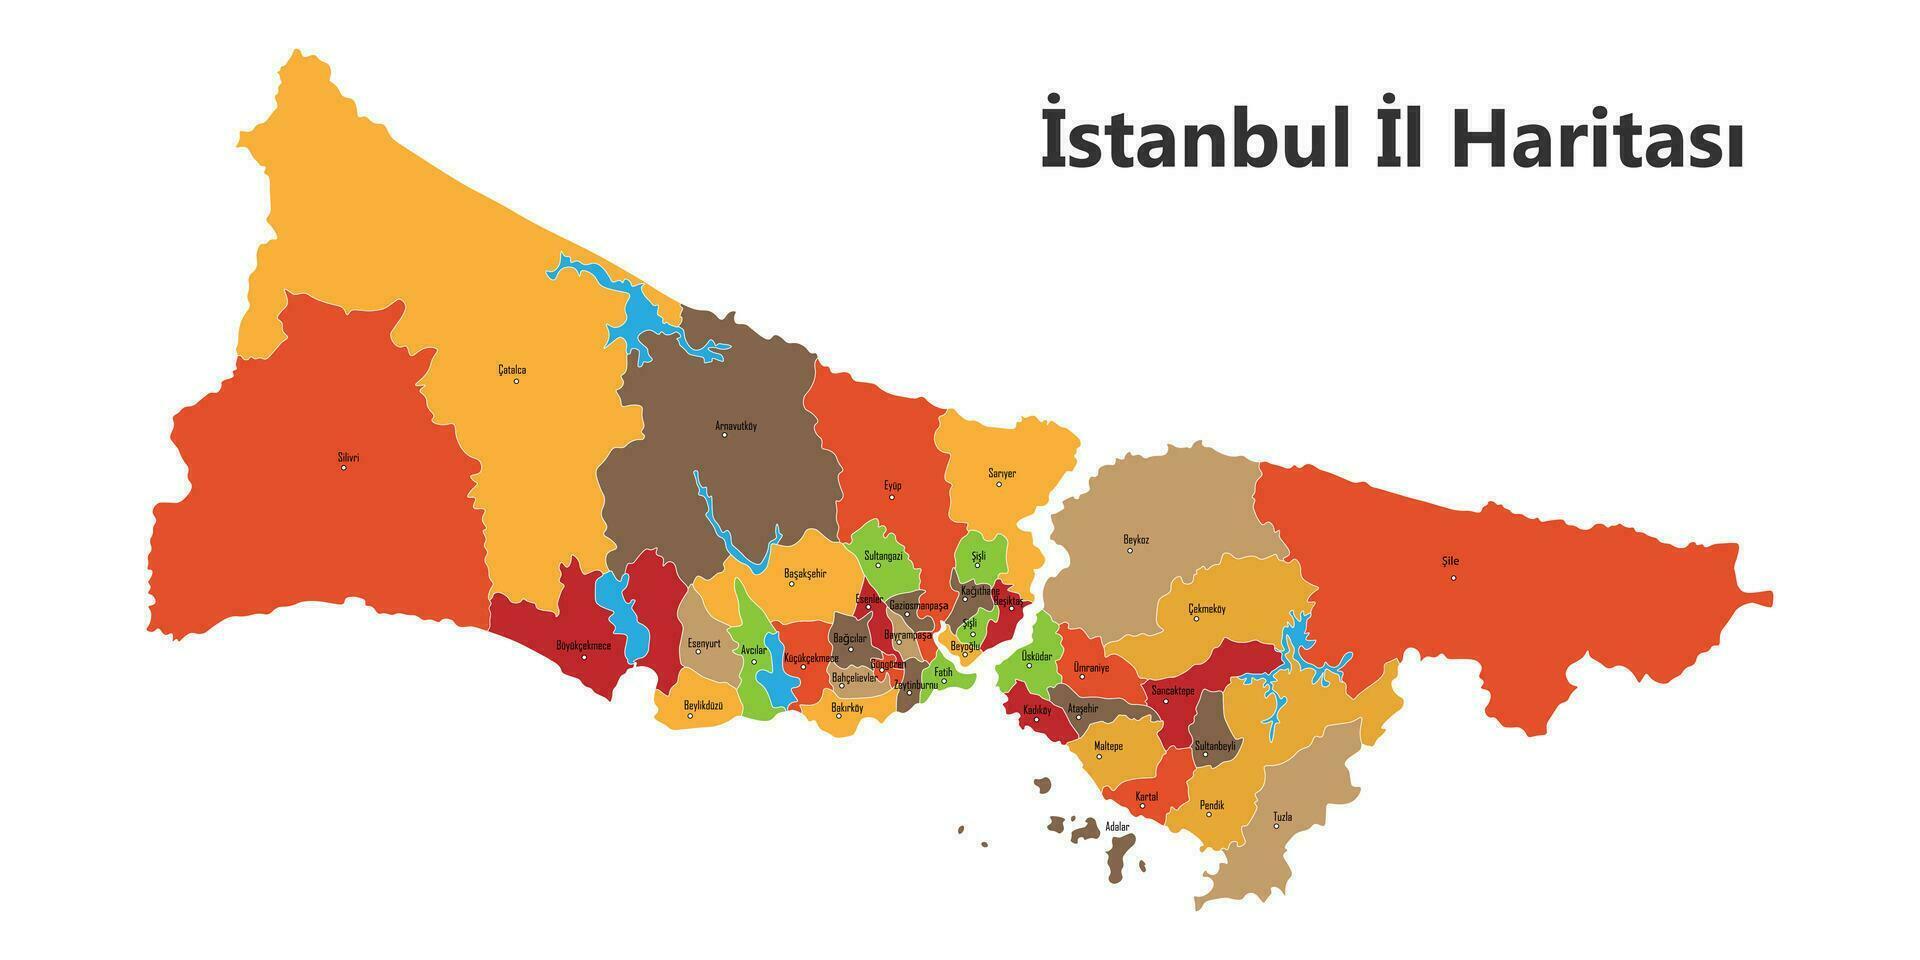 Estanbul condado mapa, vector ilustración. turco traducción, Estanbul ilceleri Haritasi isimleriyle beraber.